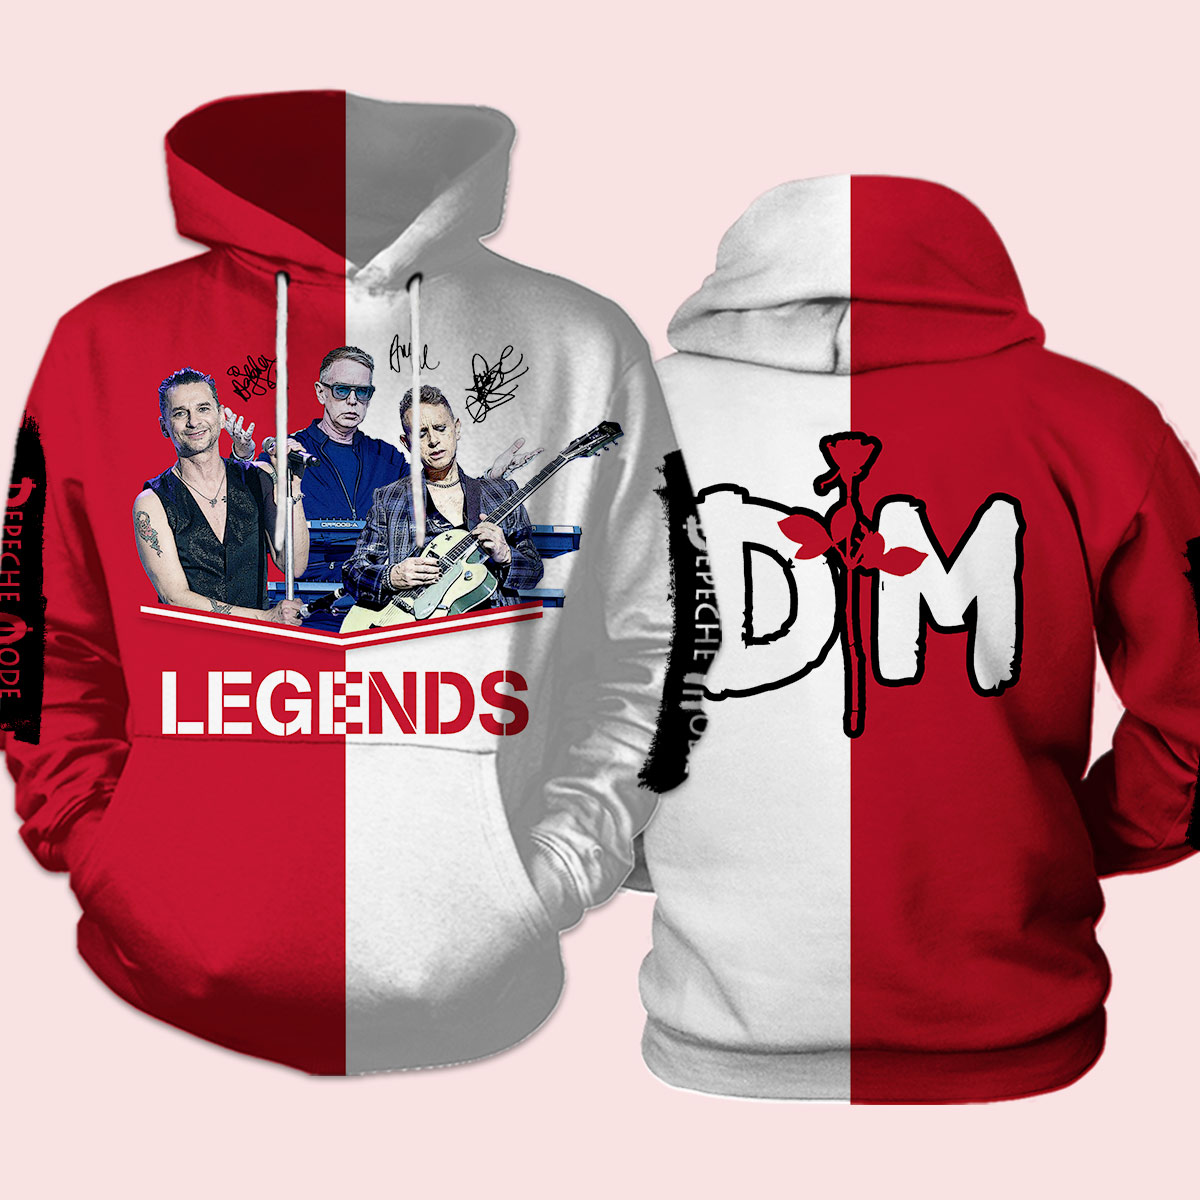 Depeche mode legends full over print hoodie